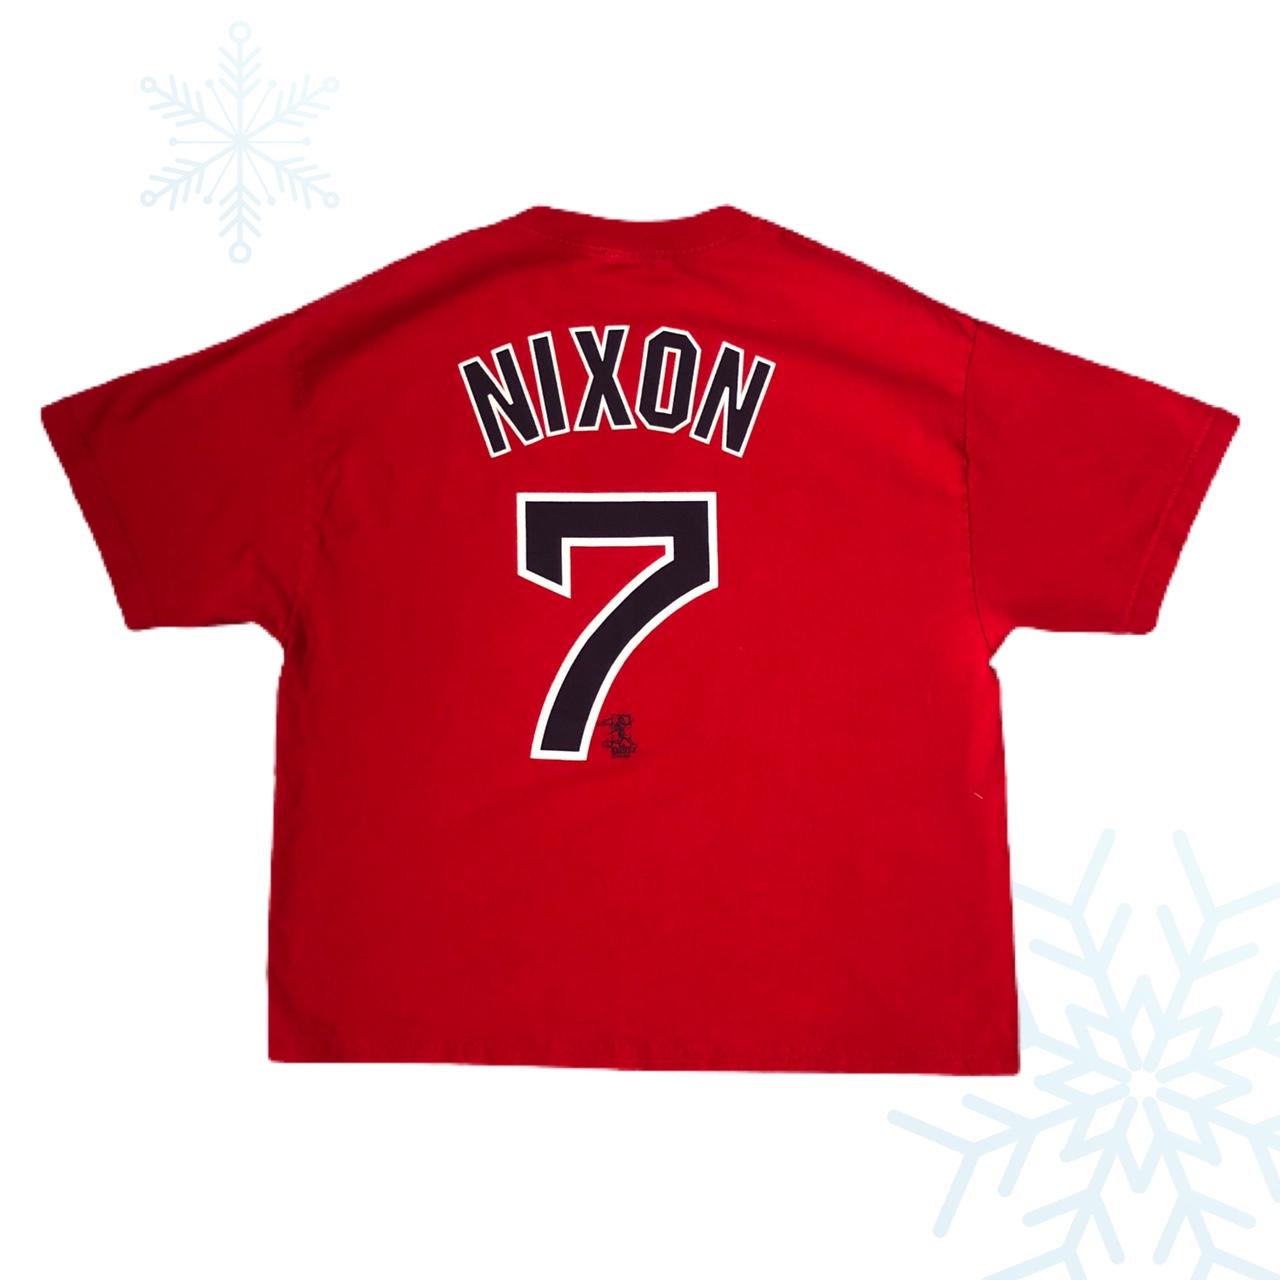 Trot Nixon Boston Red Sox Shirt Men Large Adult MLB Baseball Retro